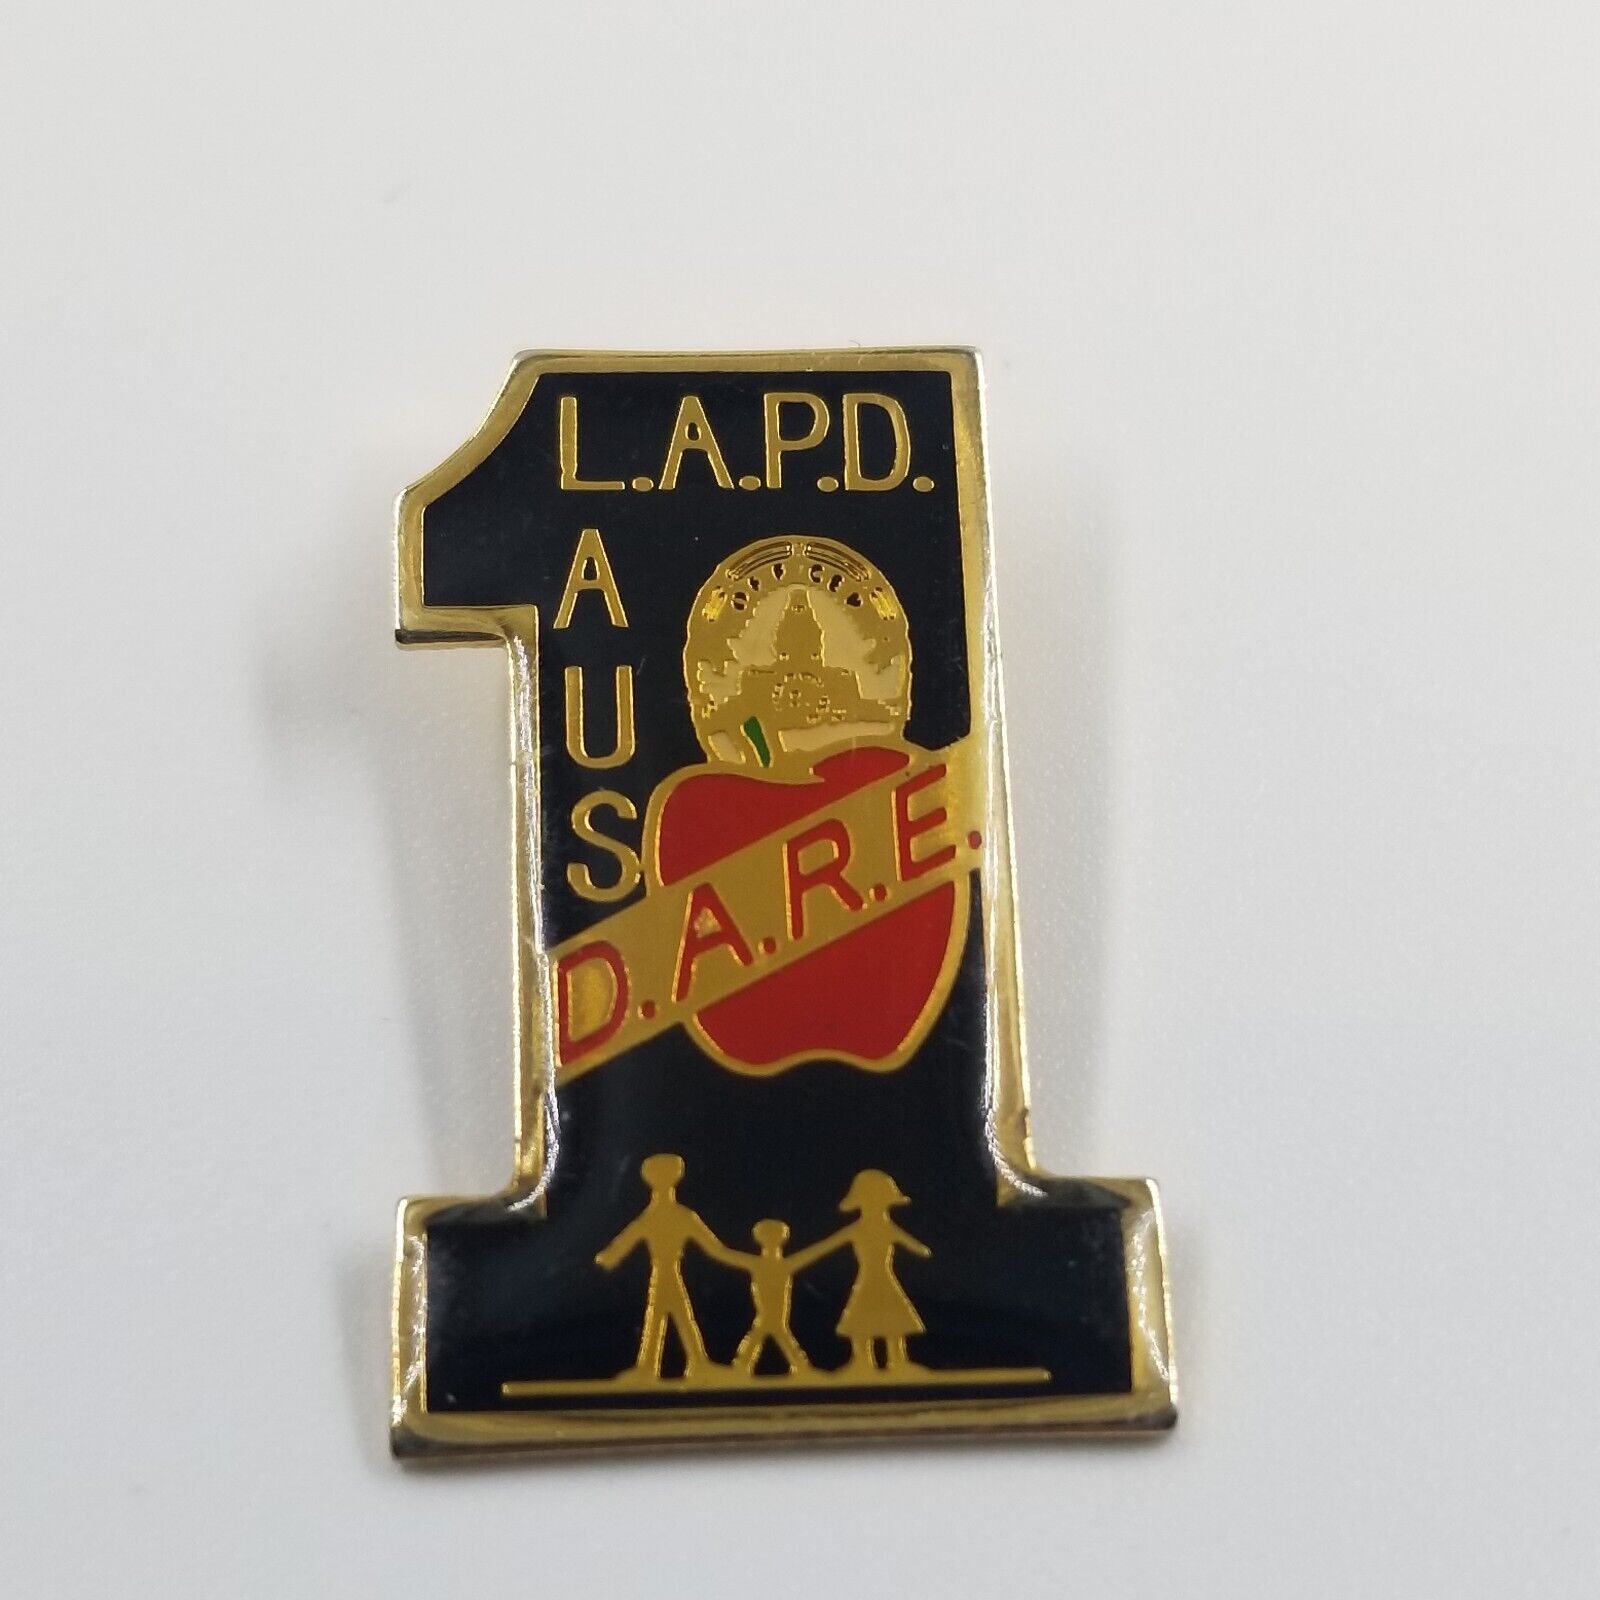 DARE LAPD Number One Shaped Apple Drug Abuse Resistance Education Pin Promo VTG